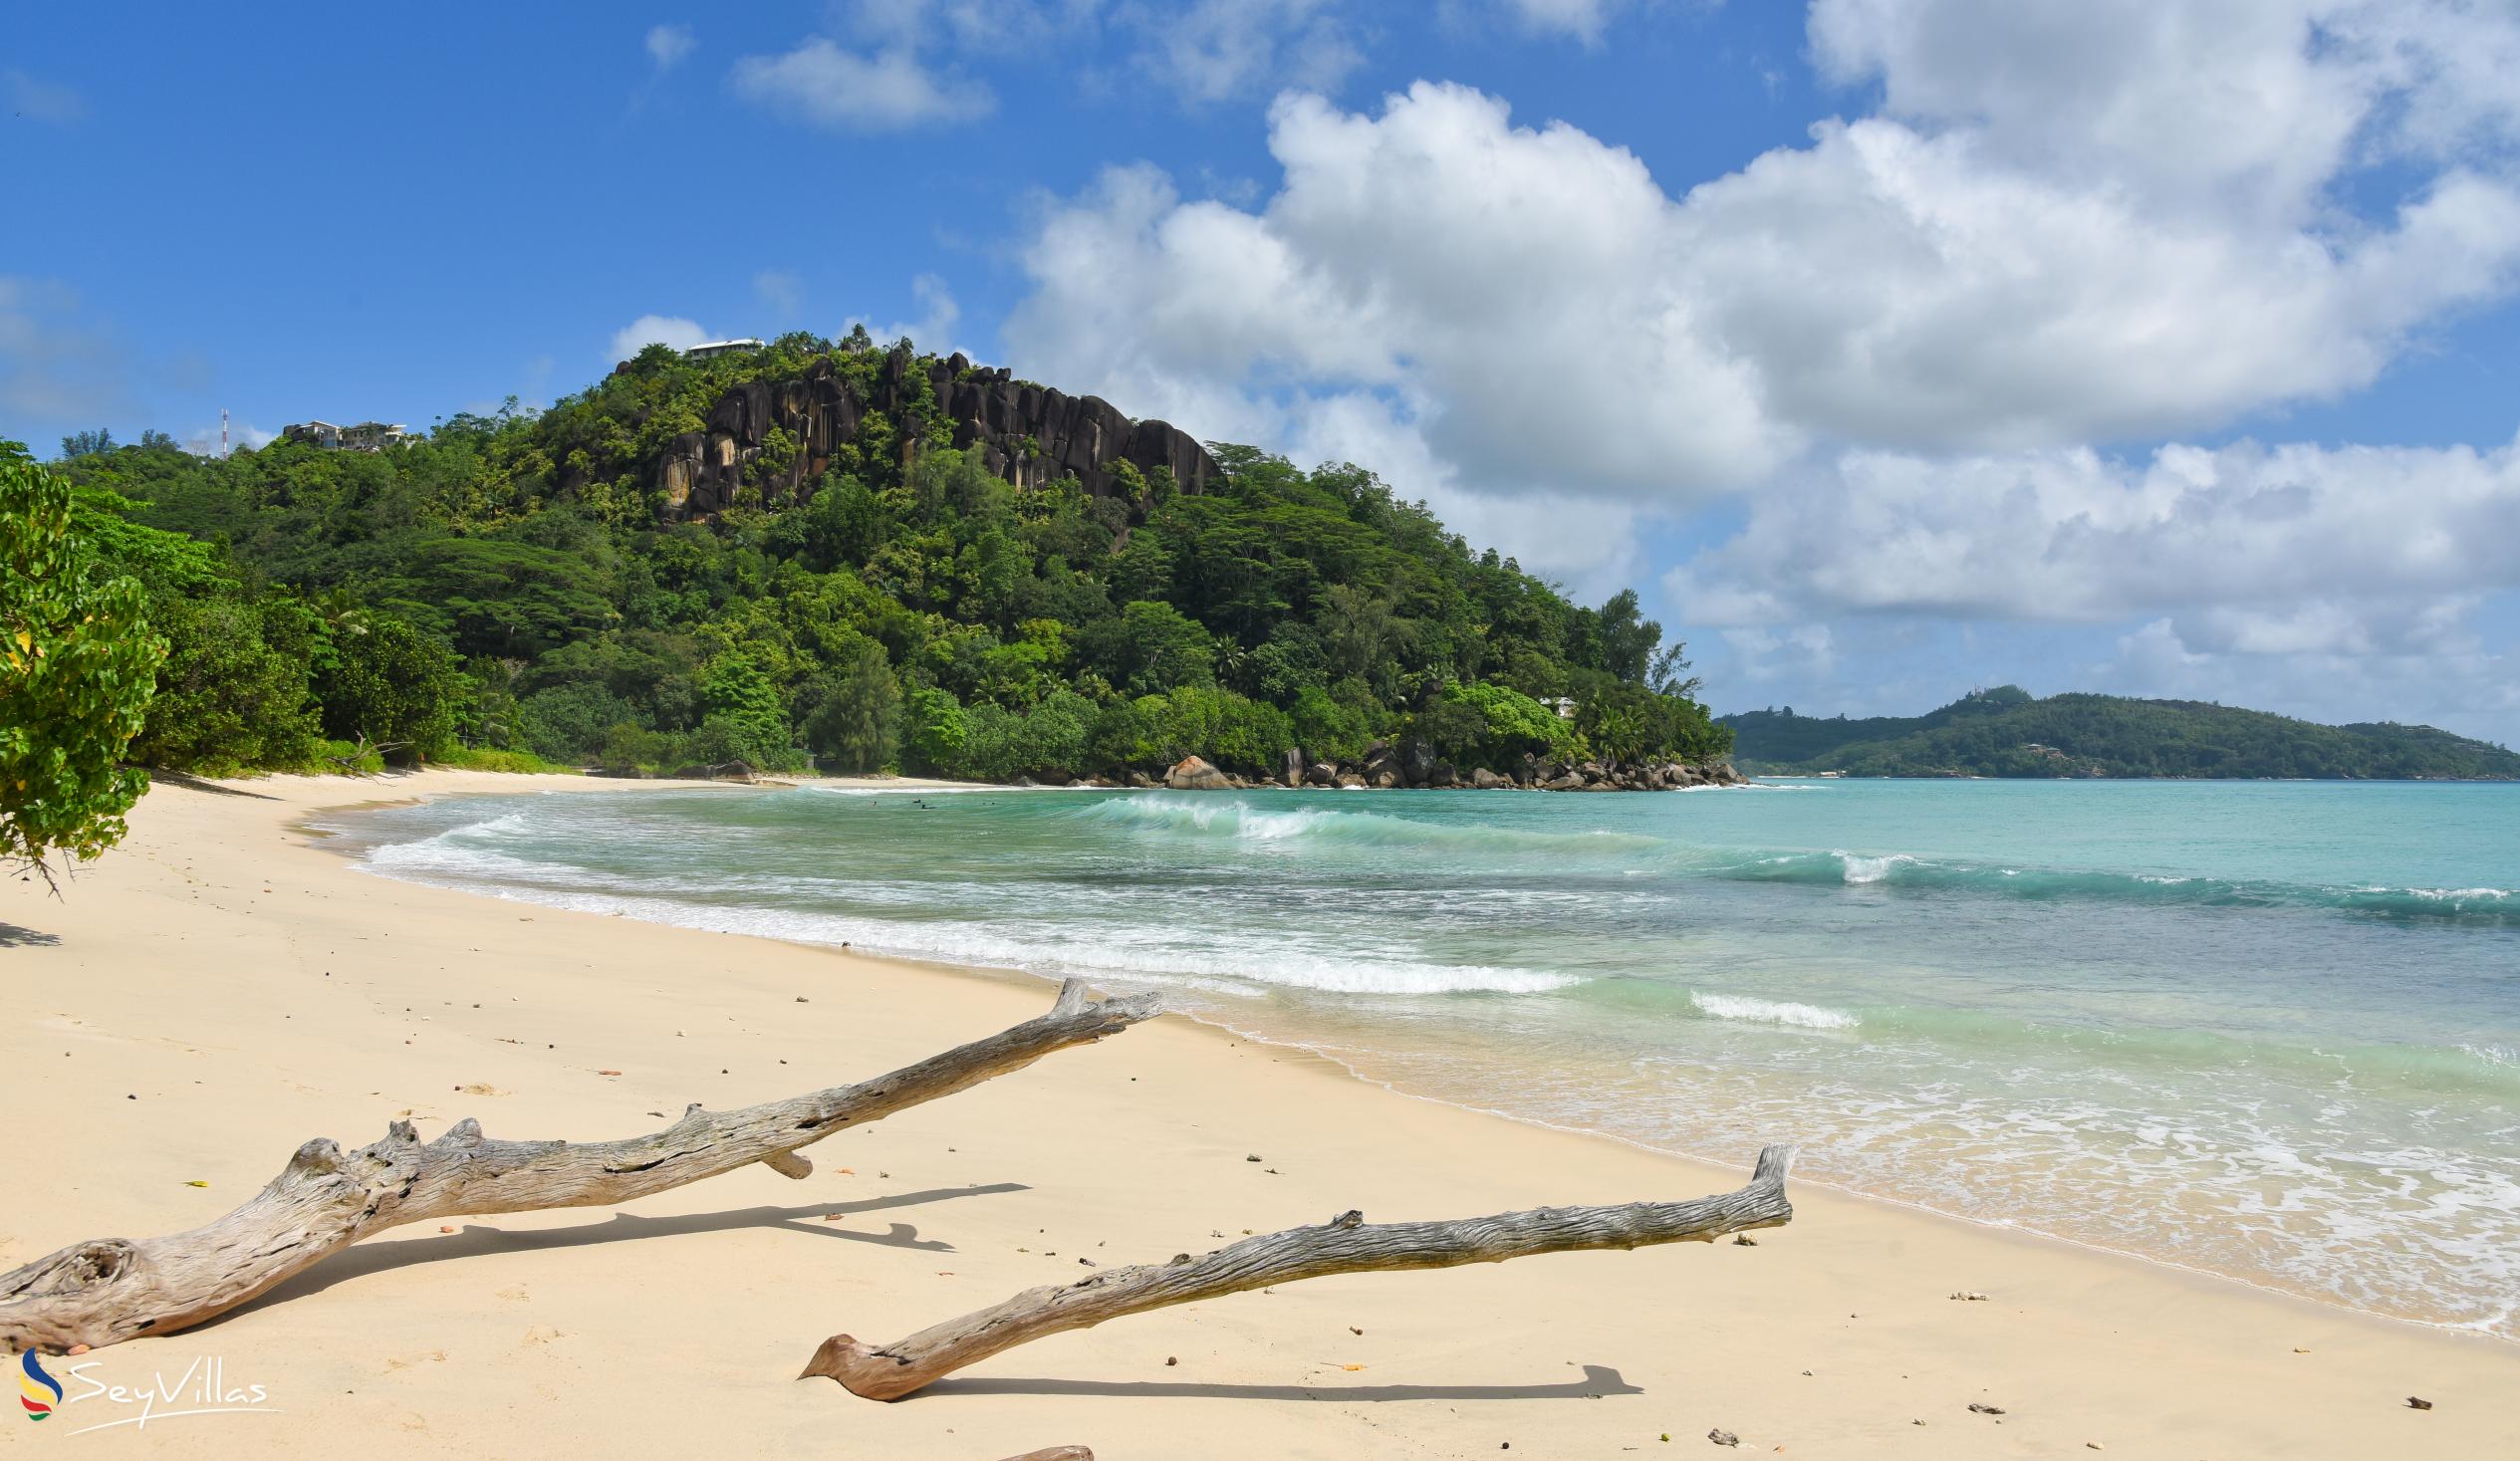 Photo 3: Anse Louis - Mahé (Seychelles)